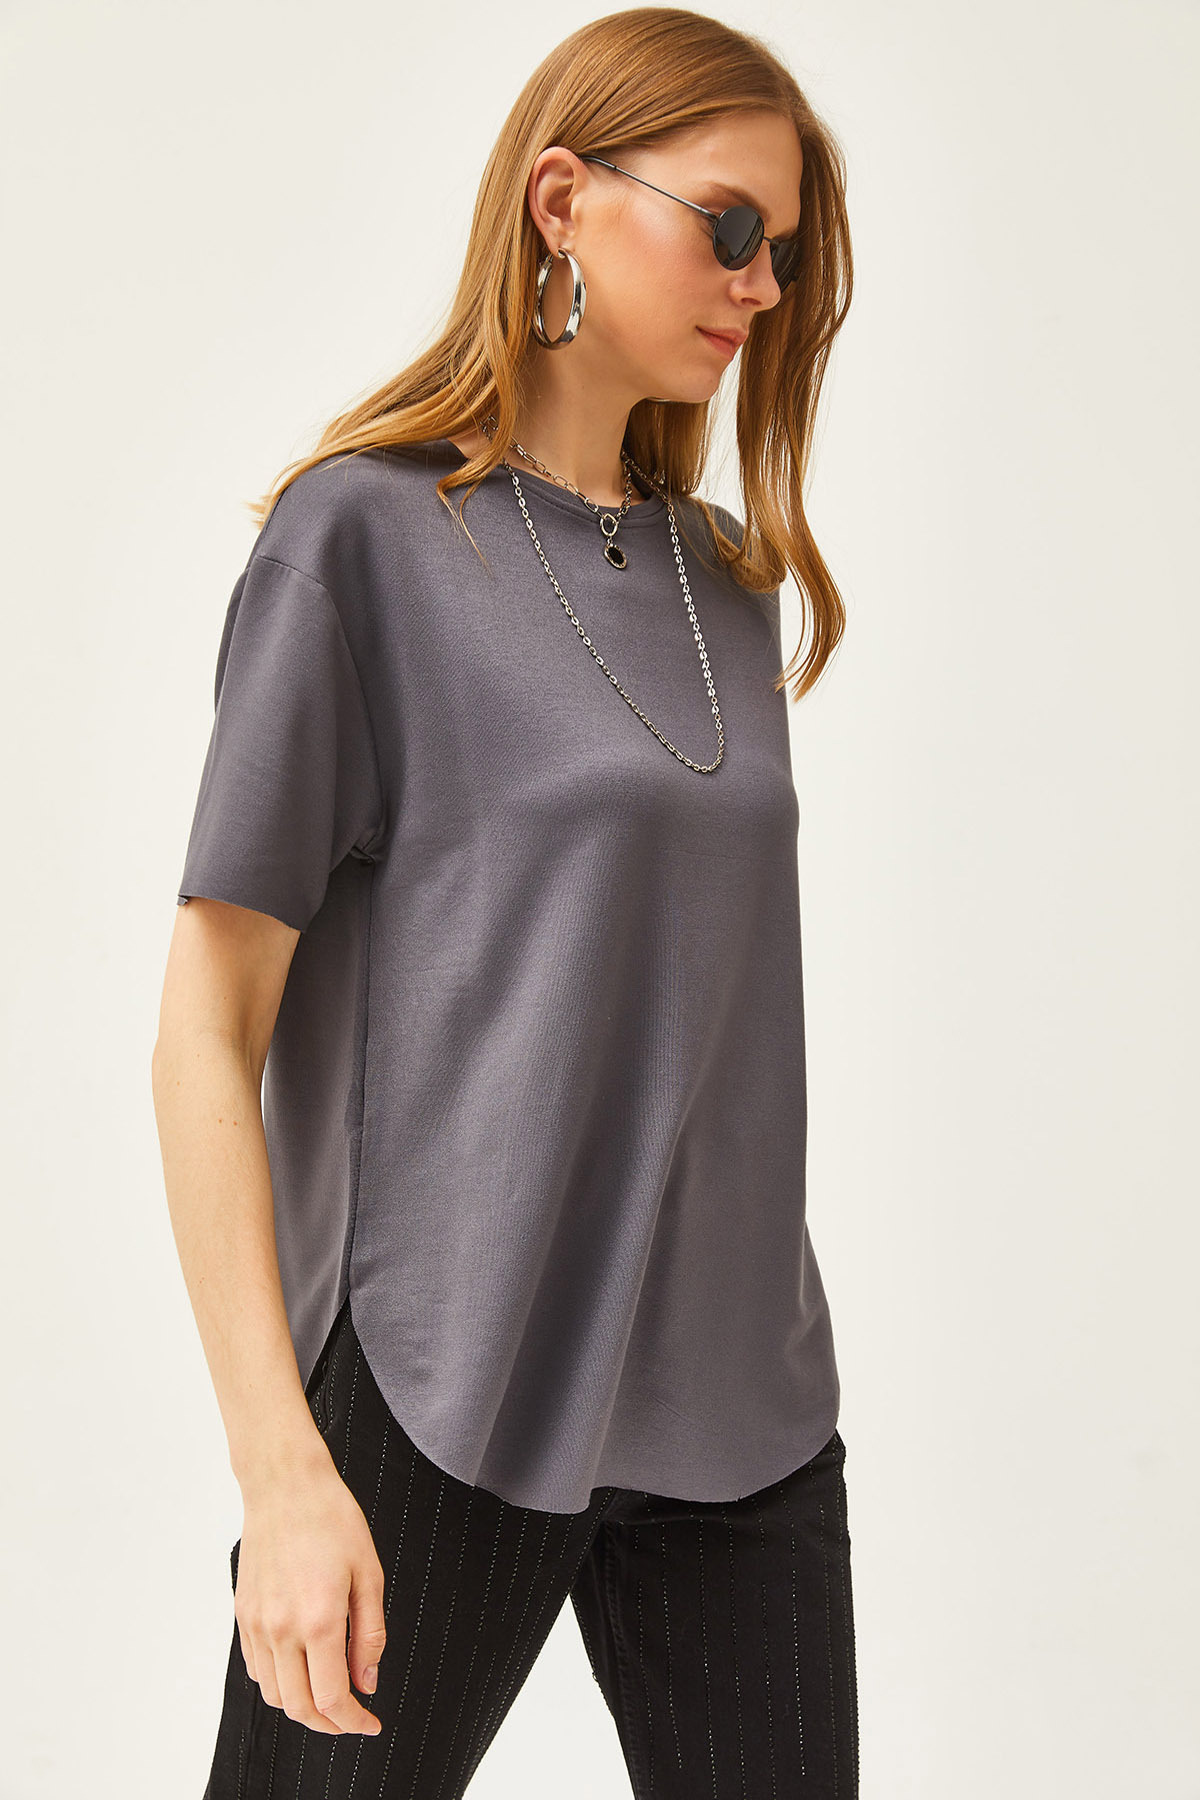 Olalook Women's Smoky Modal Touch Soft Textured Six Oval T-Shirt